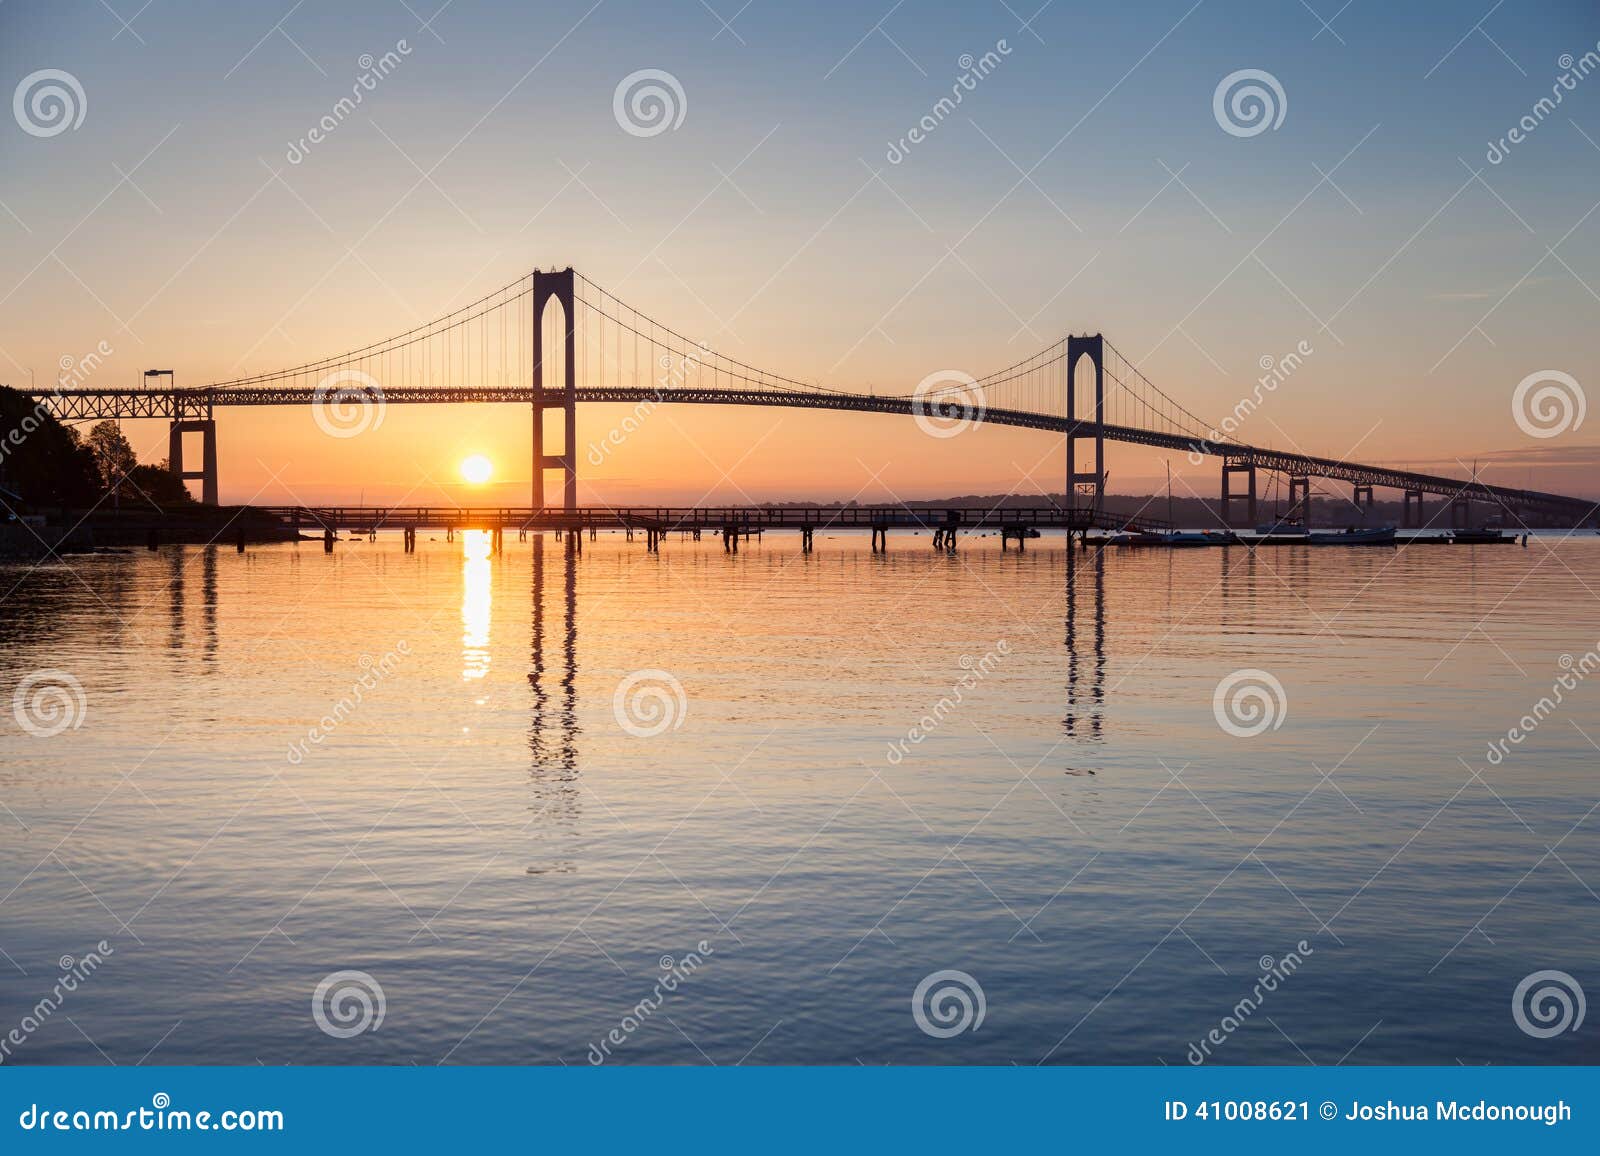 newport bridge sunrise